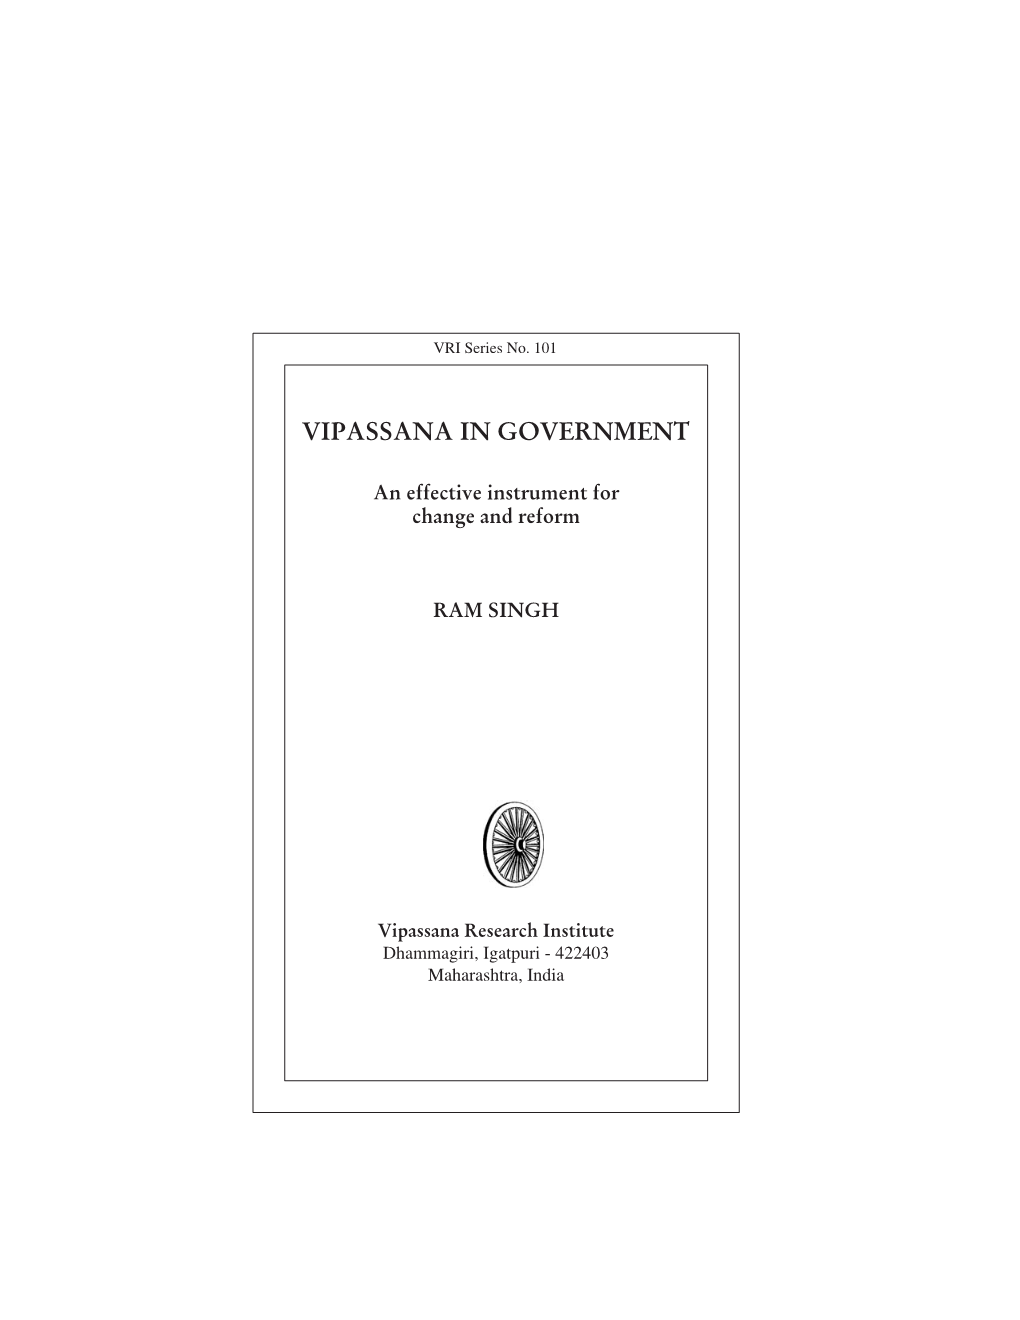 Vipassana in Government